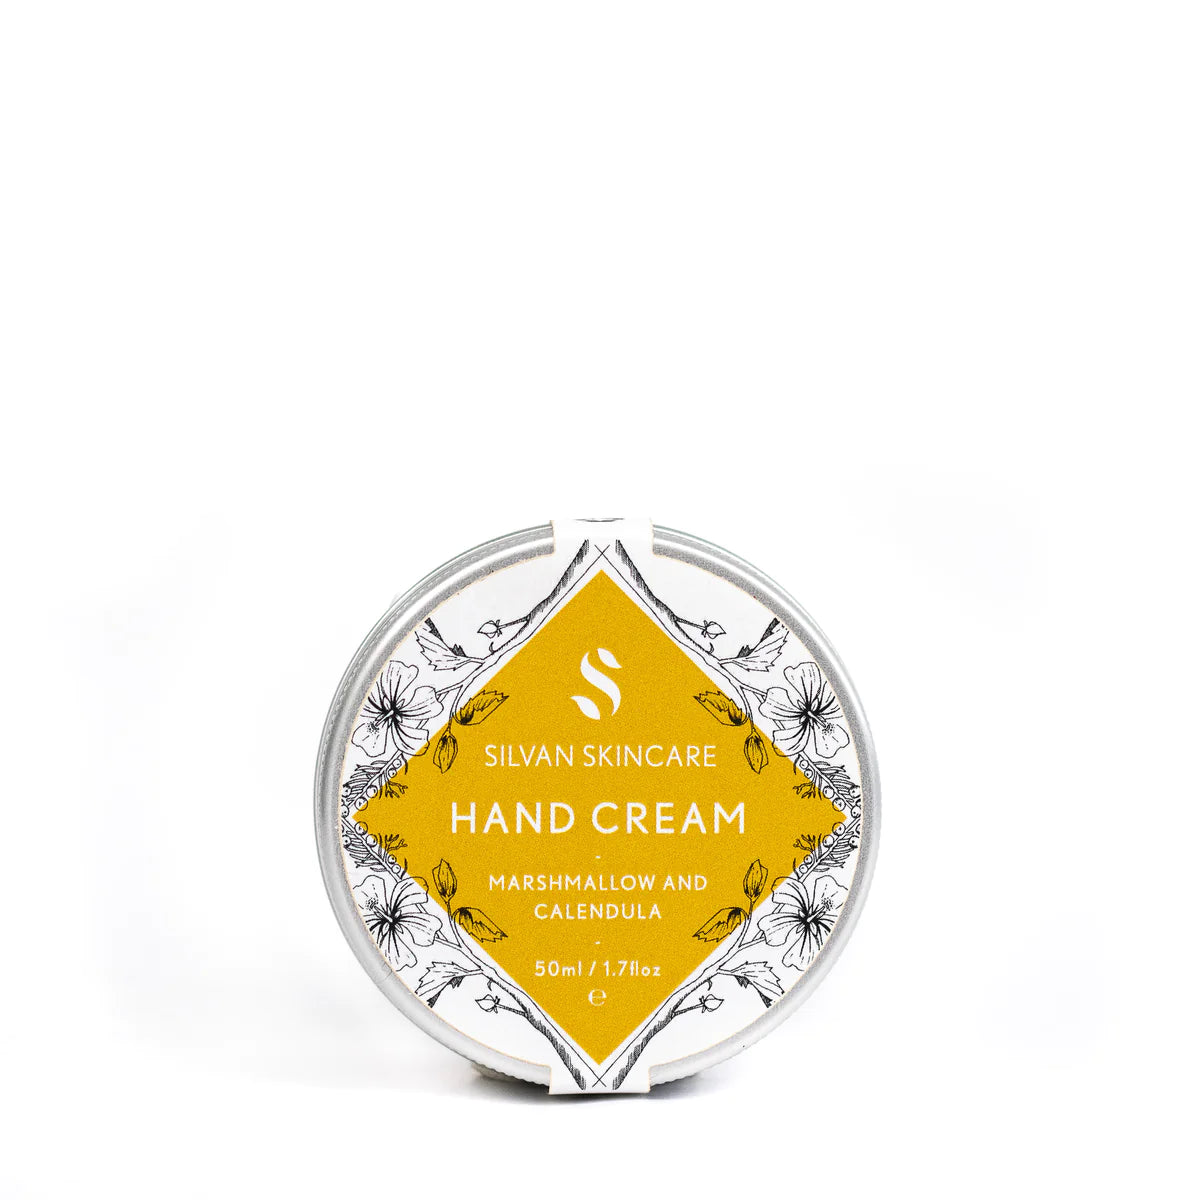 Silvan Skincare Marshmallow And Calendula Hand Cream